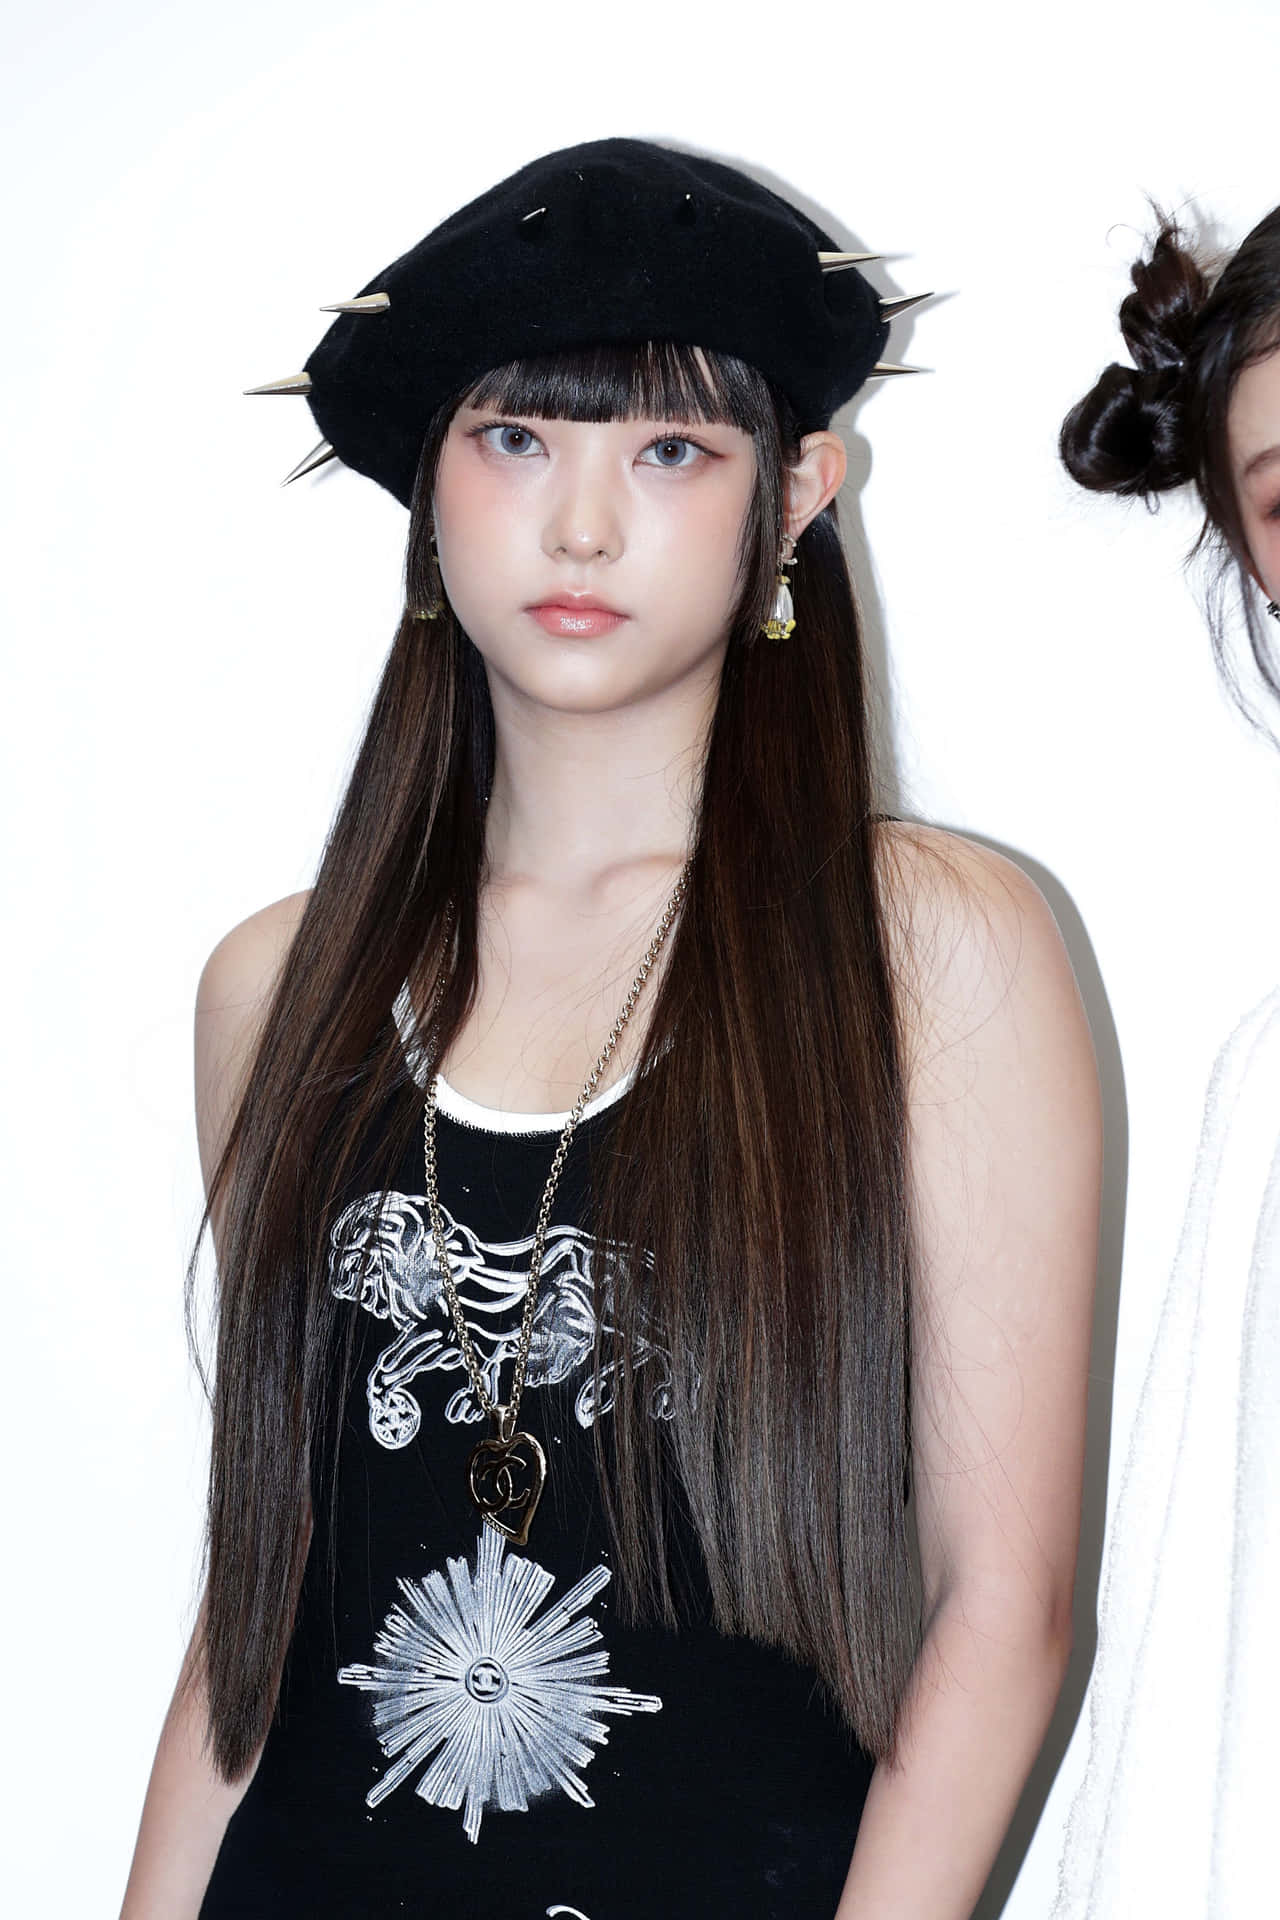 Fashionable Young Womanin Black Hatand Dress Wallpaper